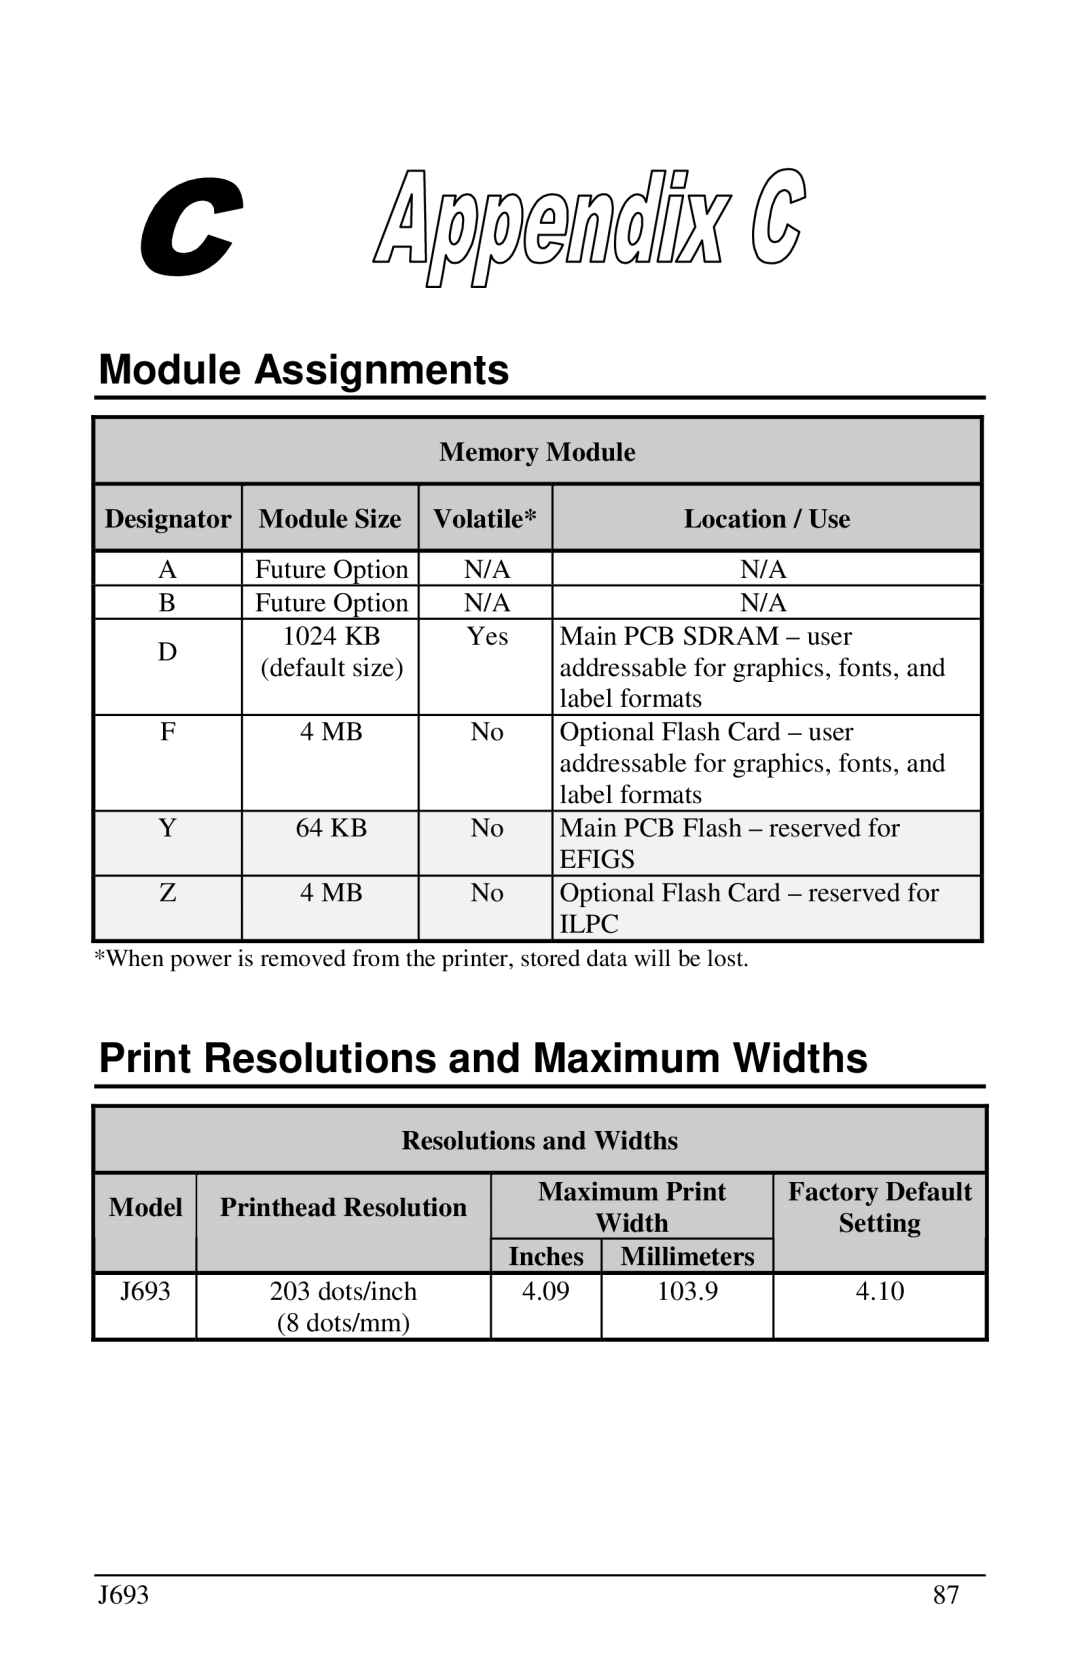 Pitney Bowes J693 Module Assignments, Print Resolutions and Maximum Widths, Memory Module, Designator, Module Size, Model 